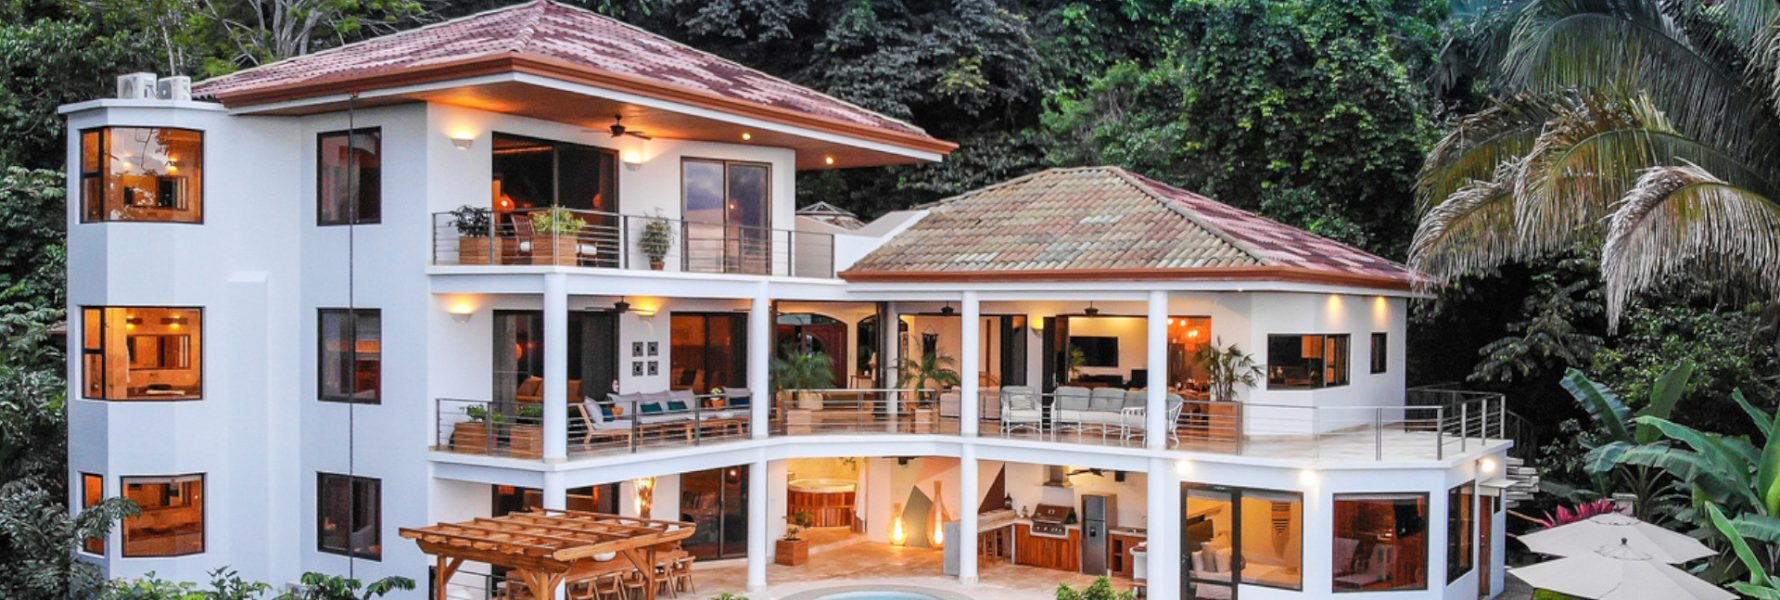 This fantastic luxury villa in Manuel Antonio has seven bedrooms and stunning ocean views throughout.